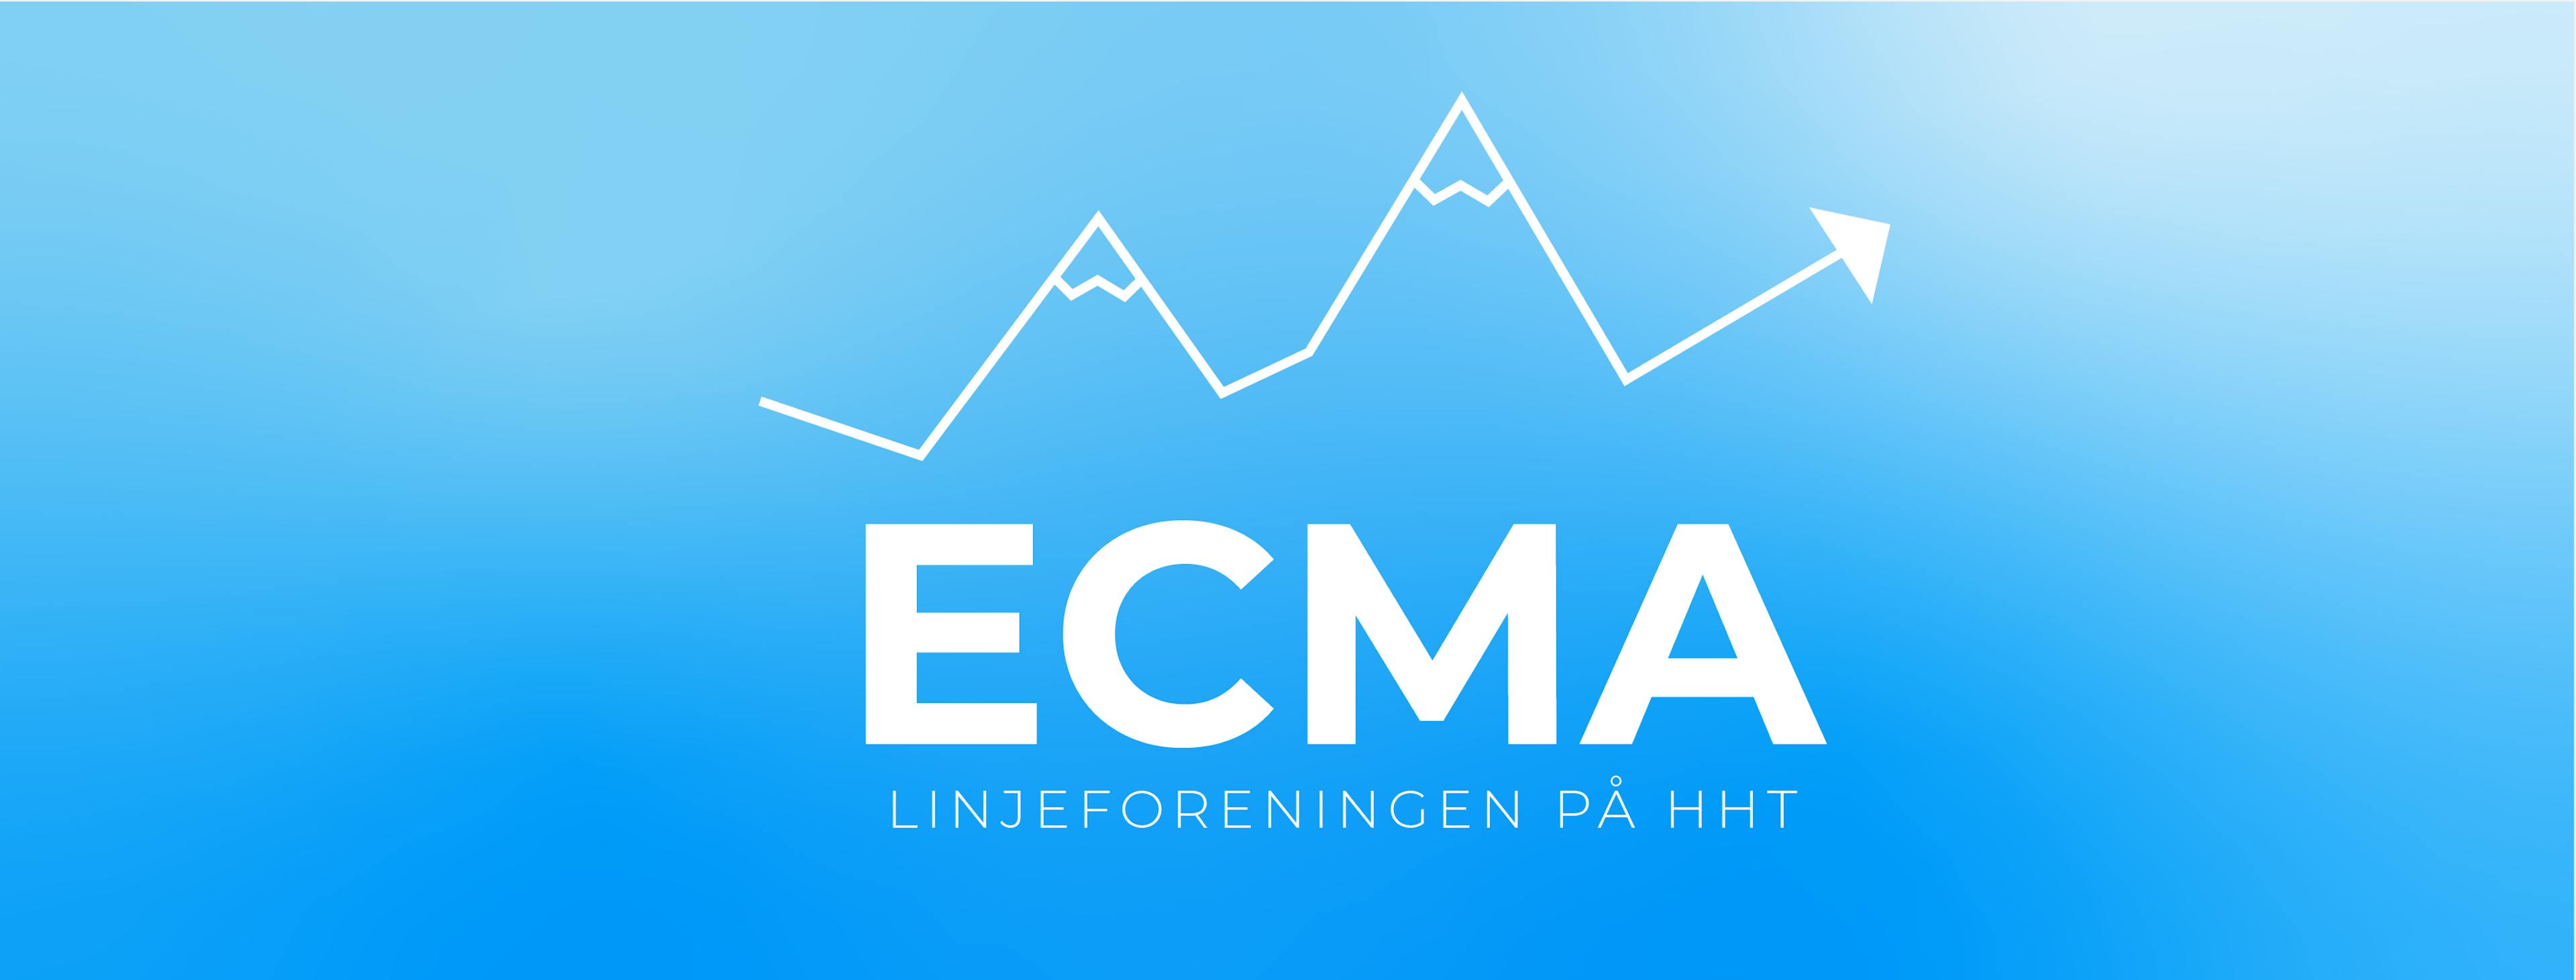 ECMA banner 01